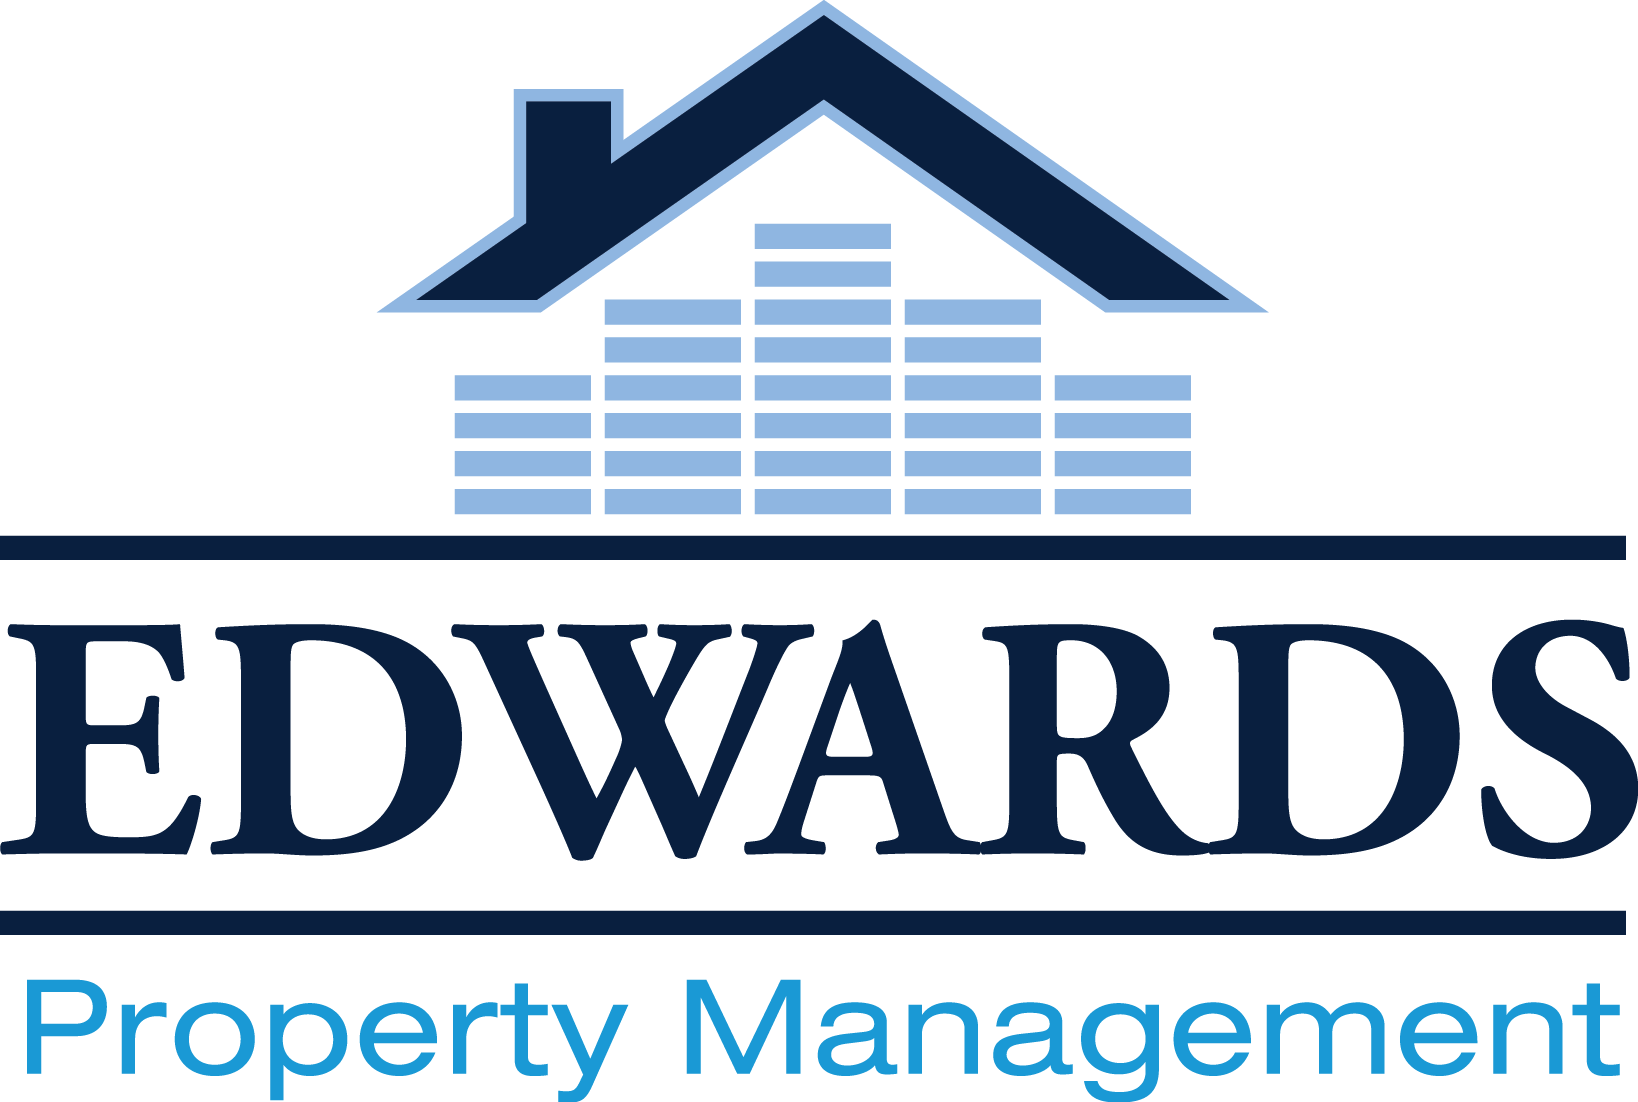 Property Management Company Logo - Garner Property Management, Garner Property Managers